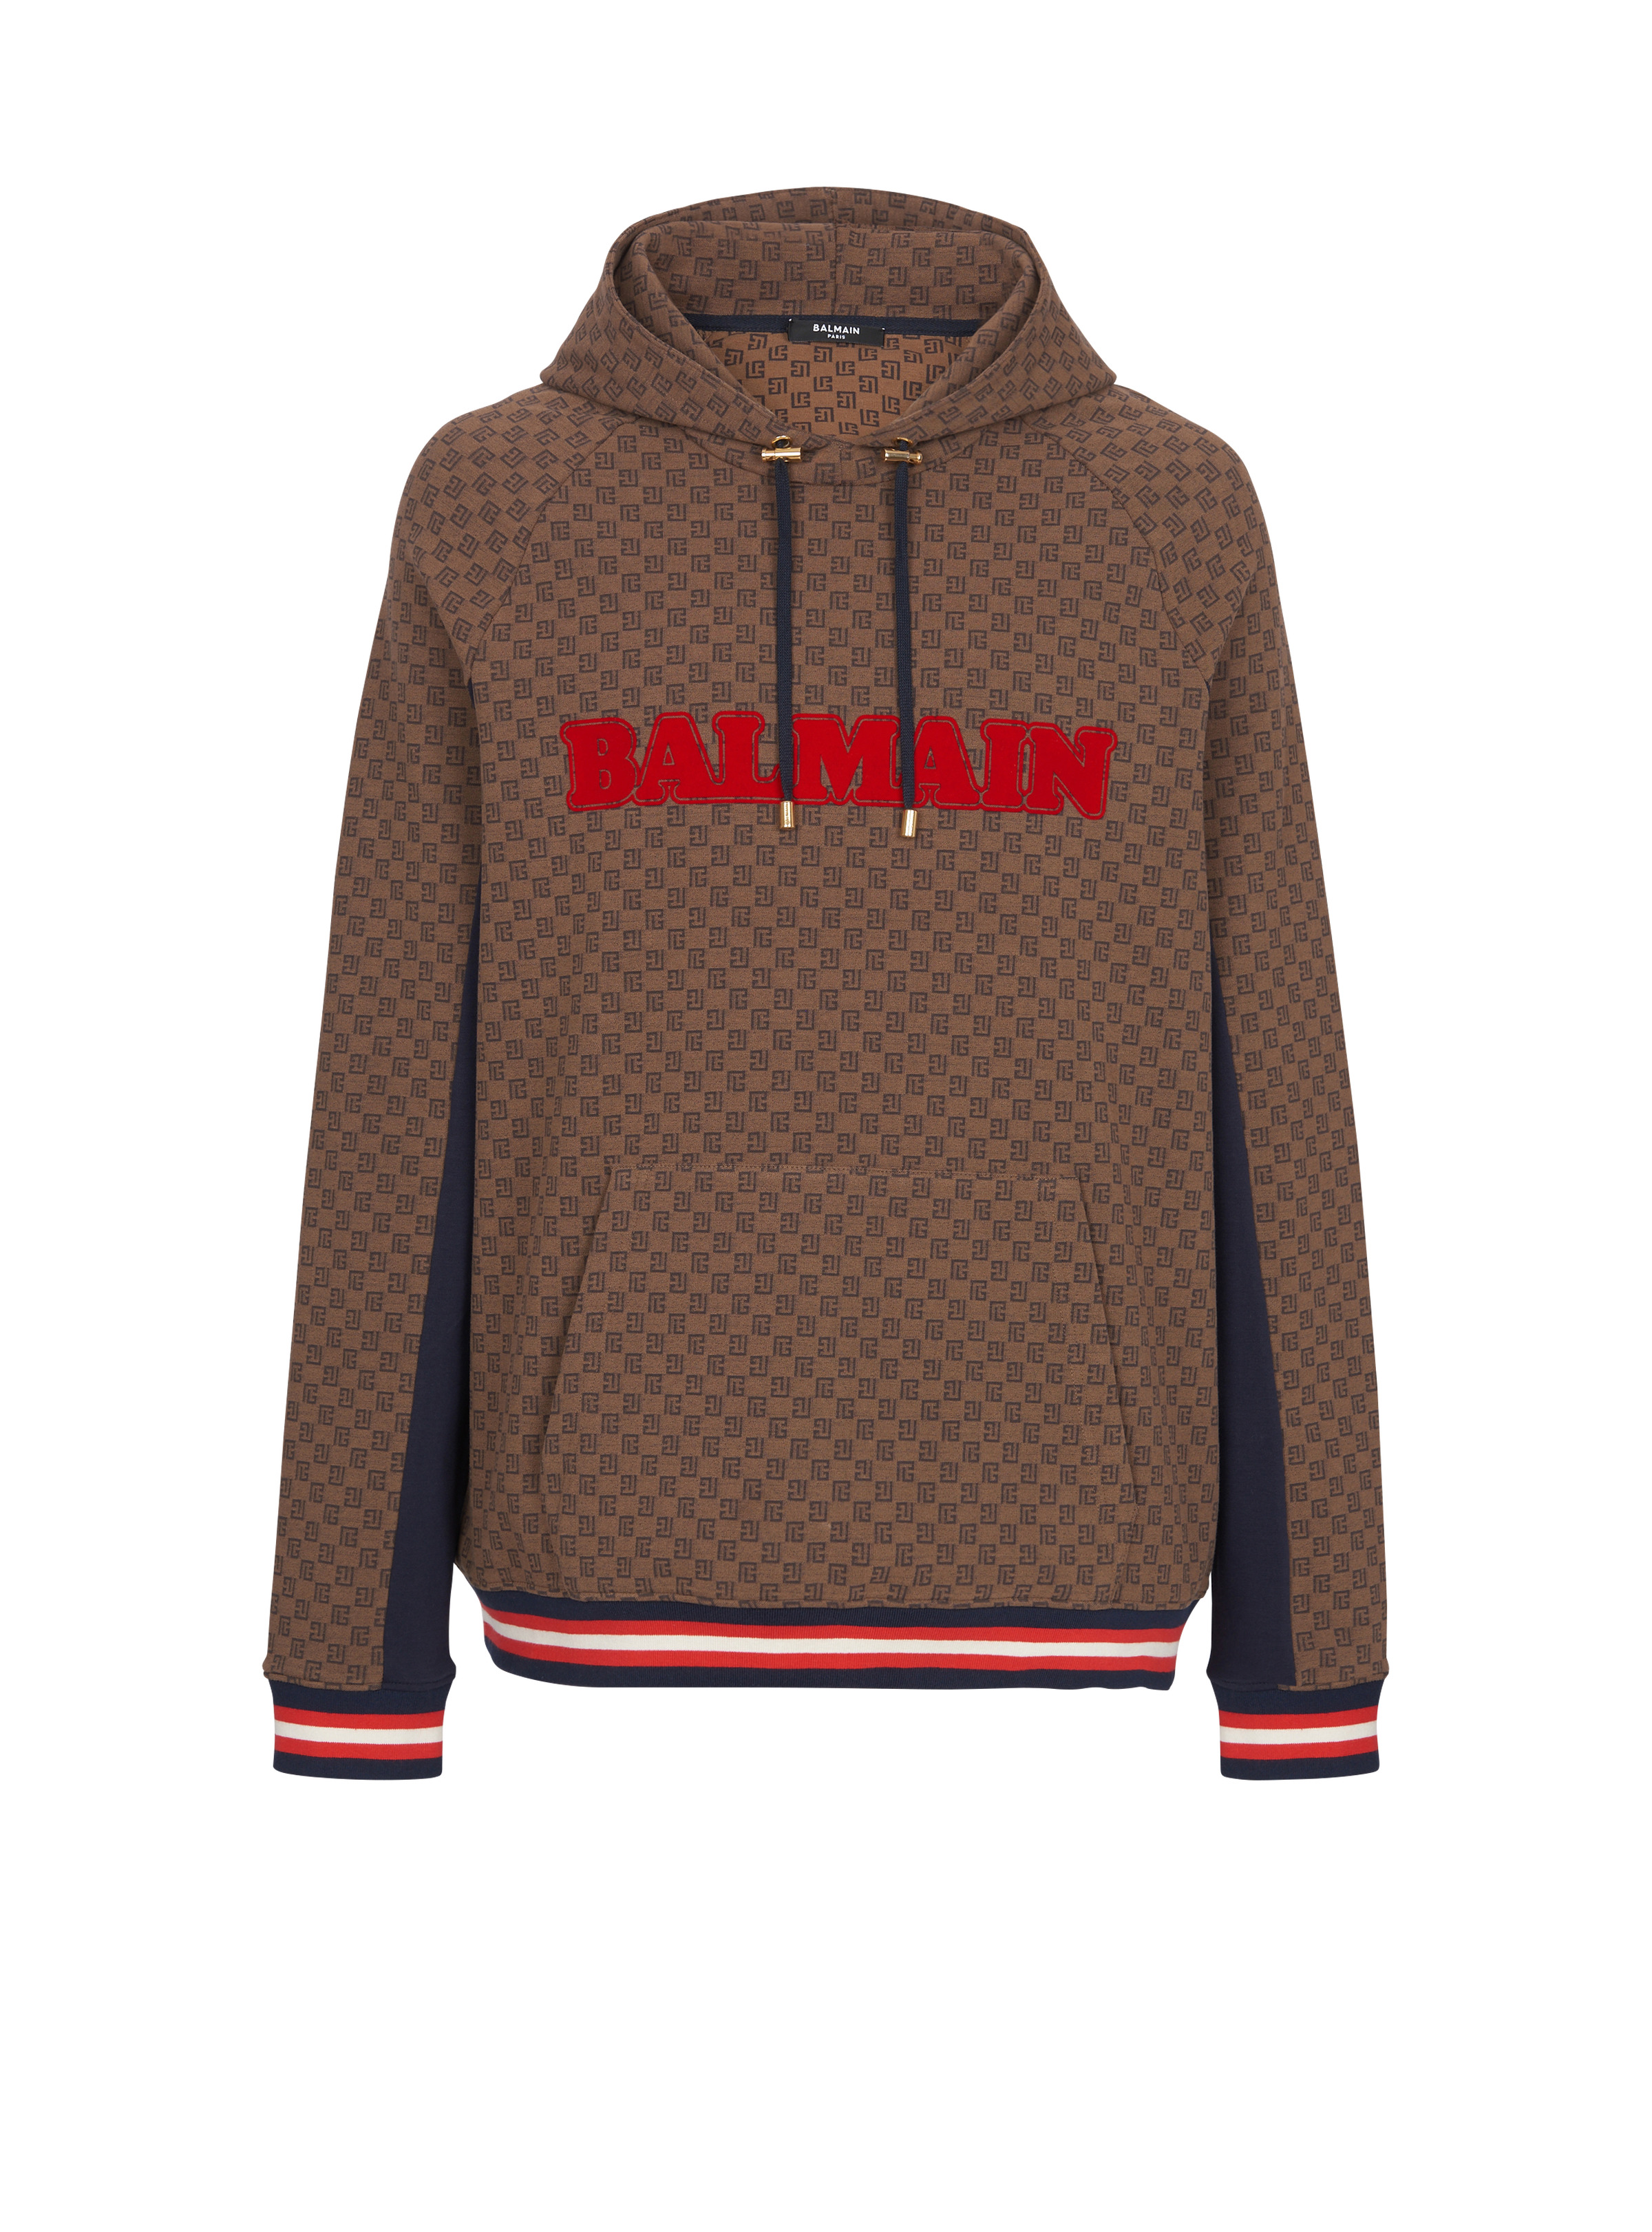 Balmain Reversible Monogram-Print Hooded Jacket